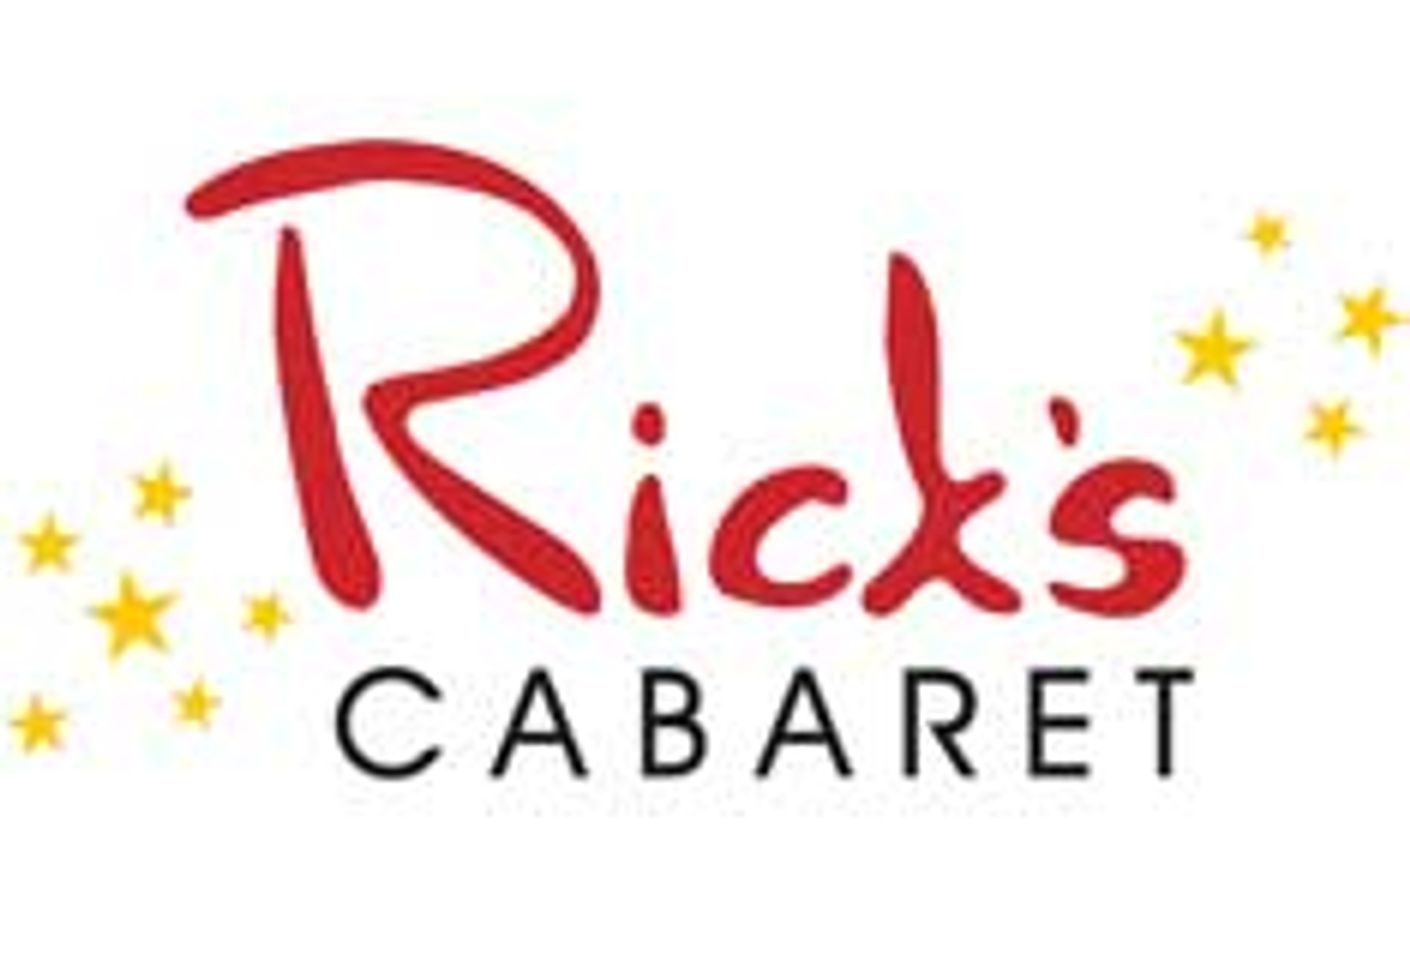 Rick's Cabaret NYC Named Best Gentlemen's Club in the Northeast in Exotic Dancer Awards